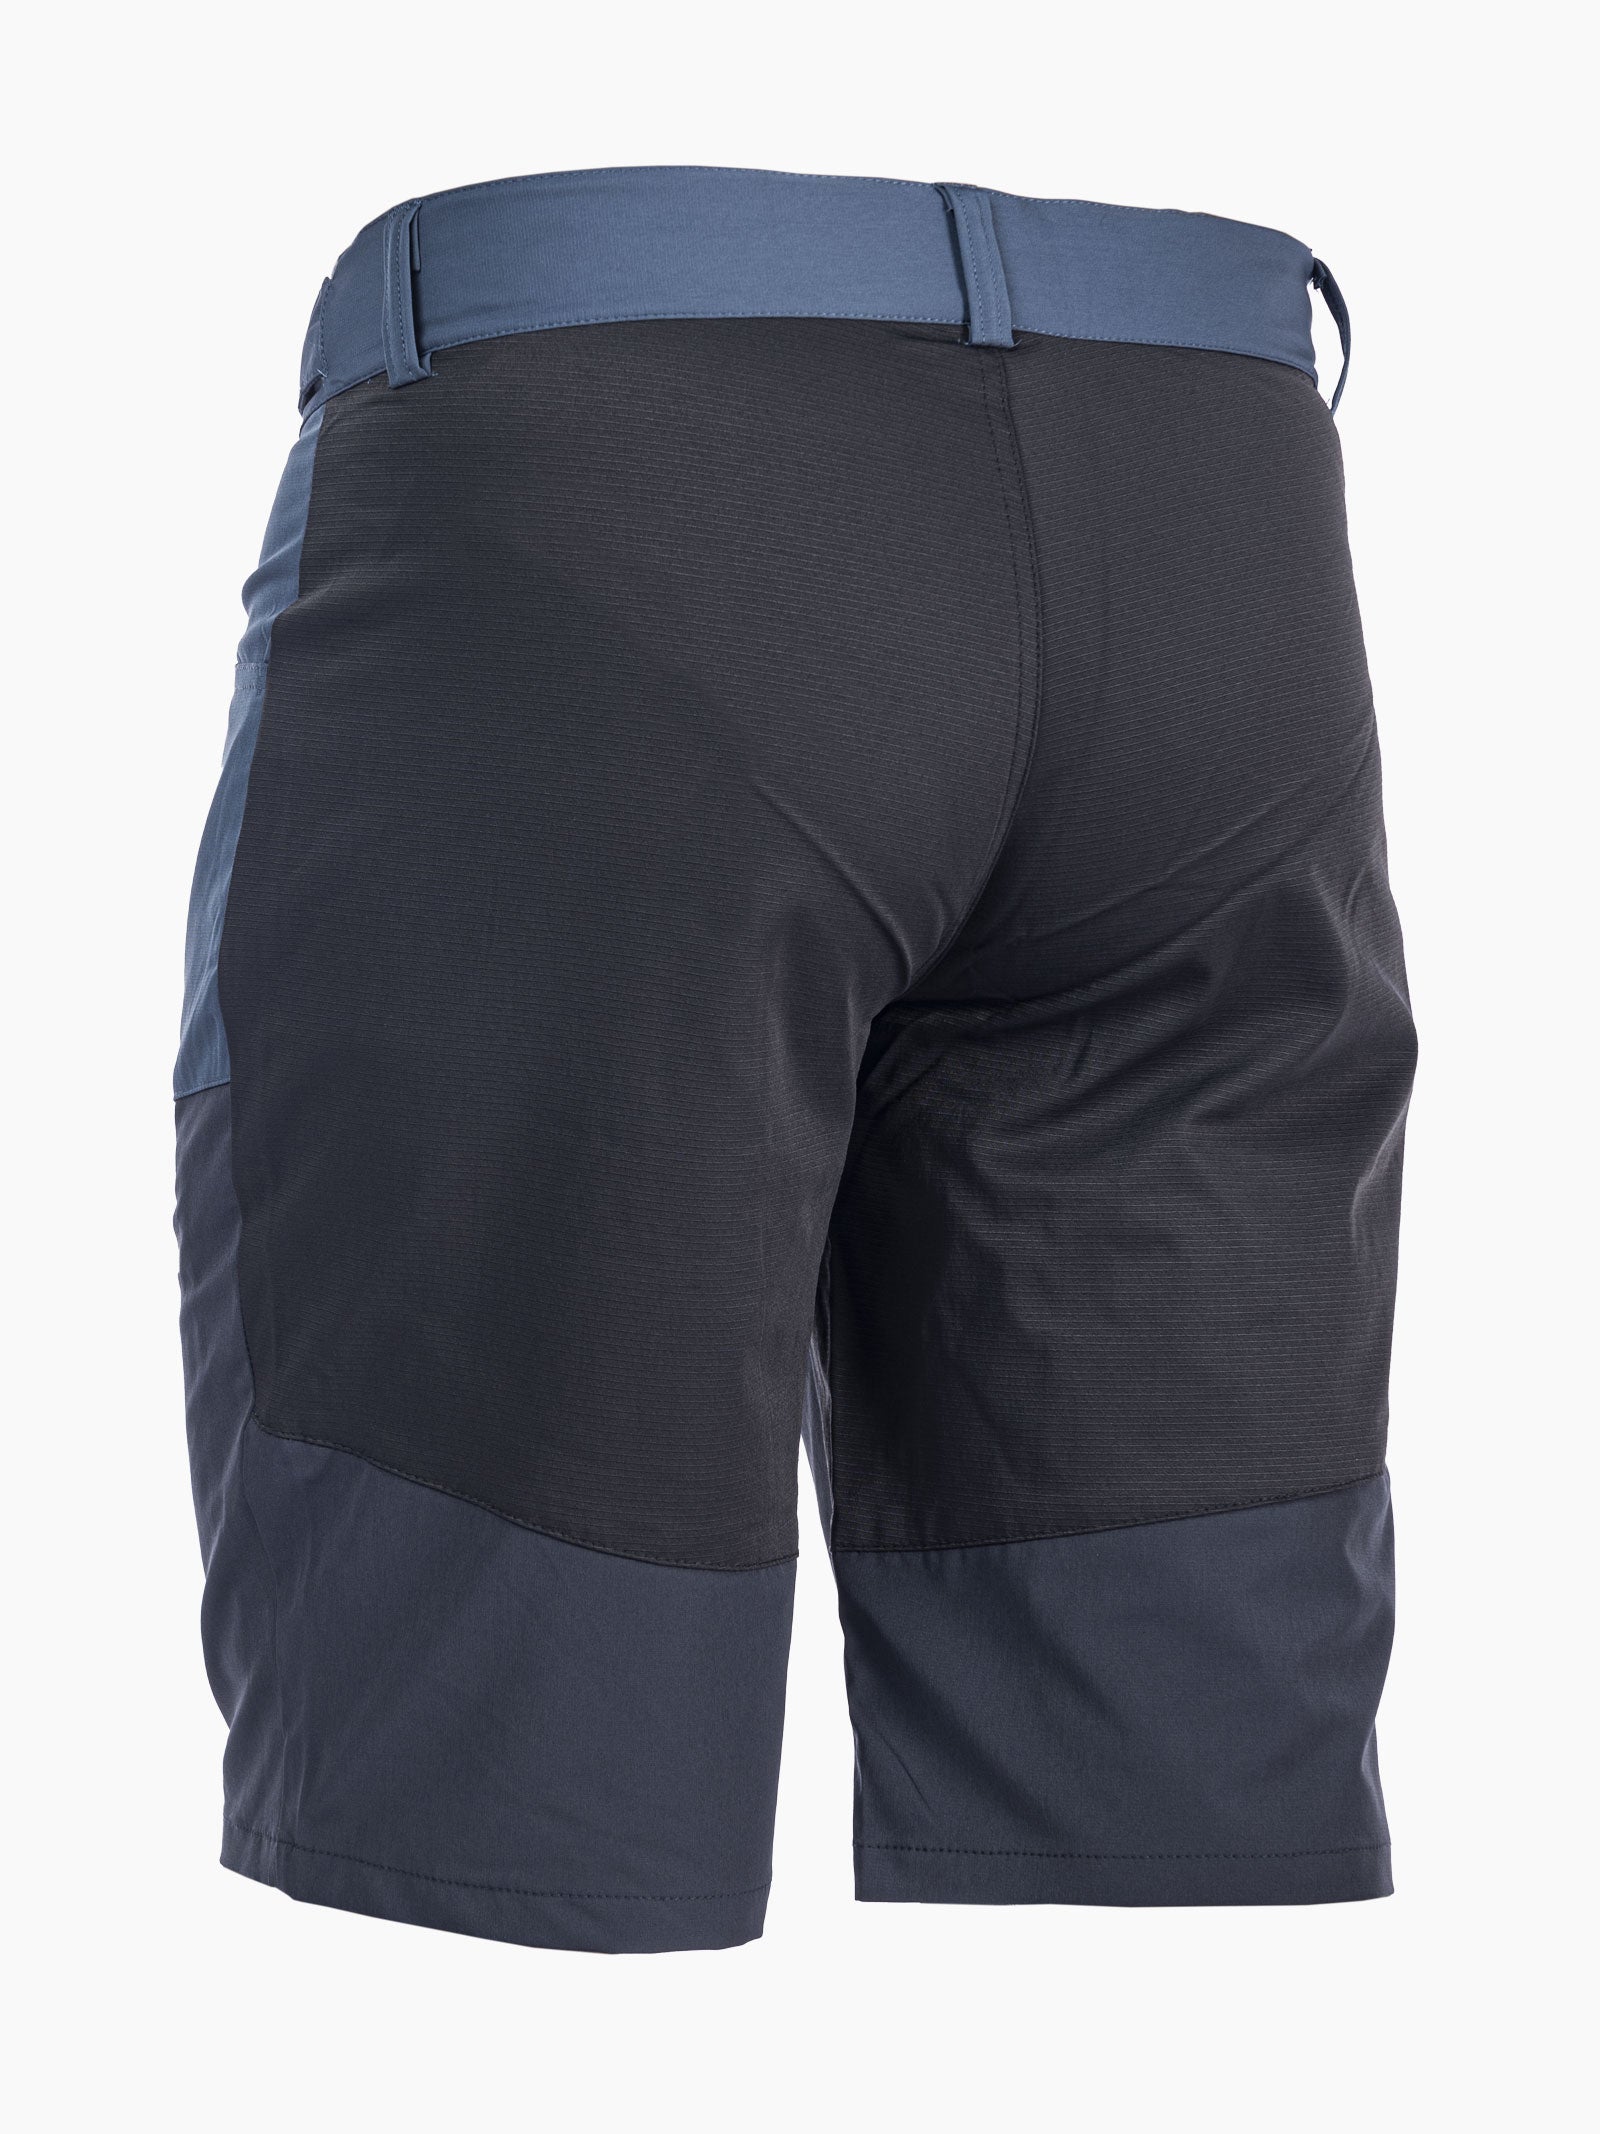 Skei herre MoveOn shorts - Bering Sea/Ombre Blue